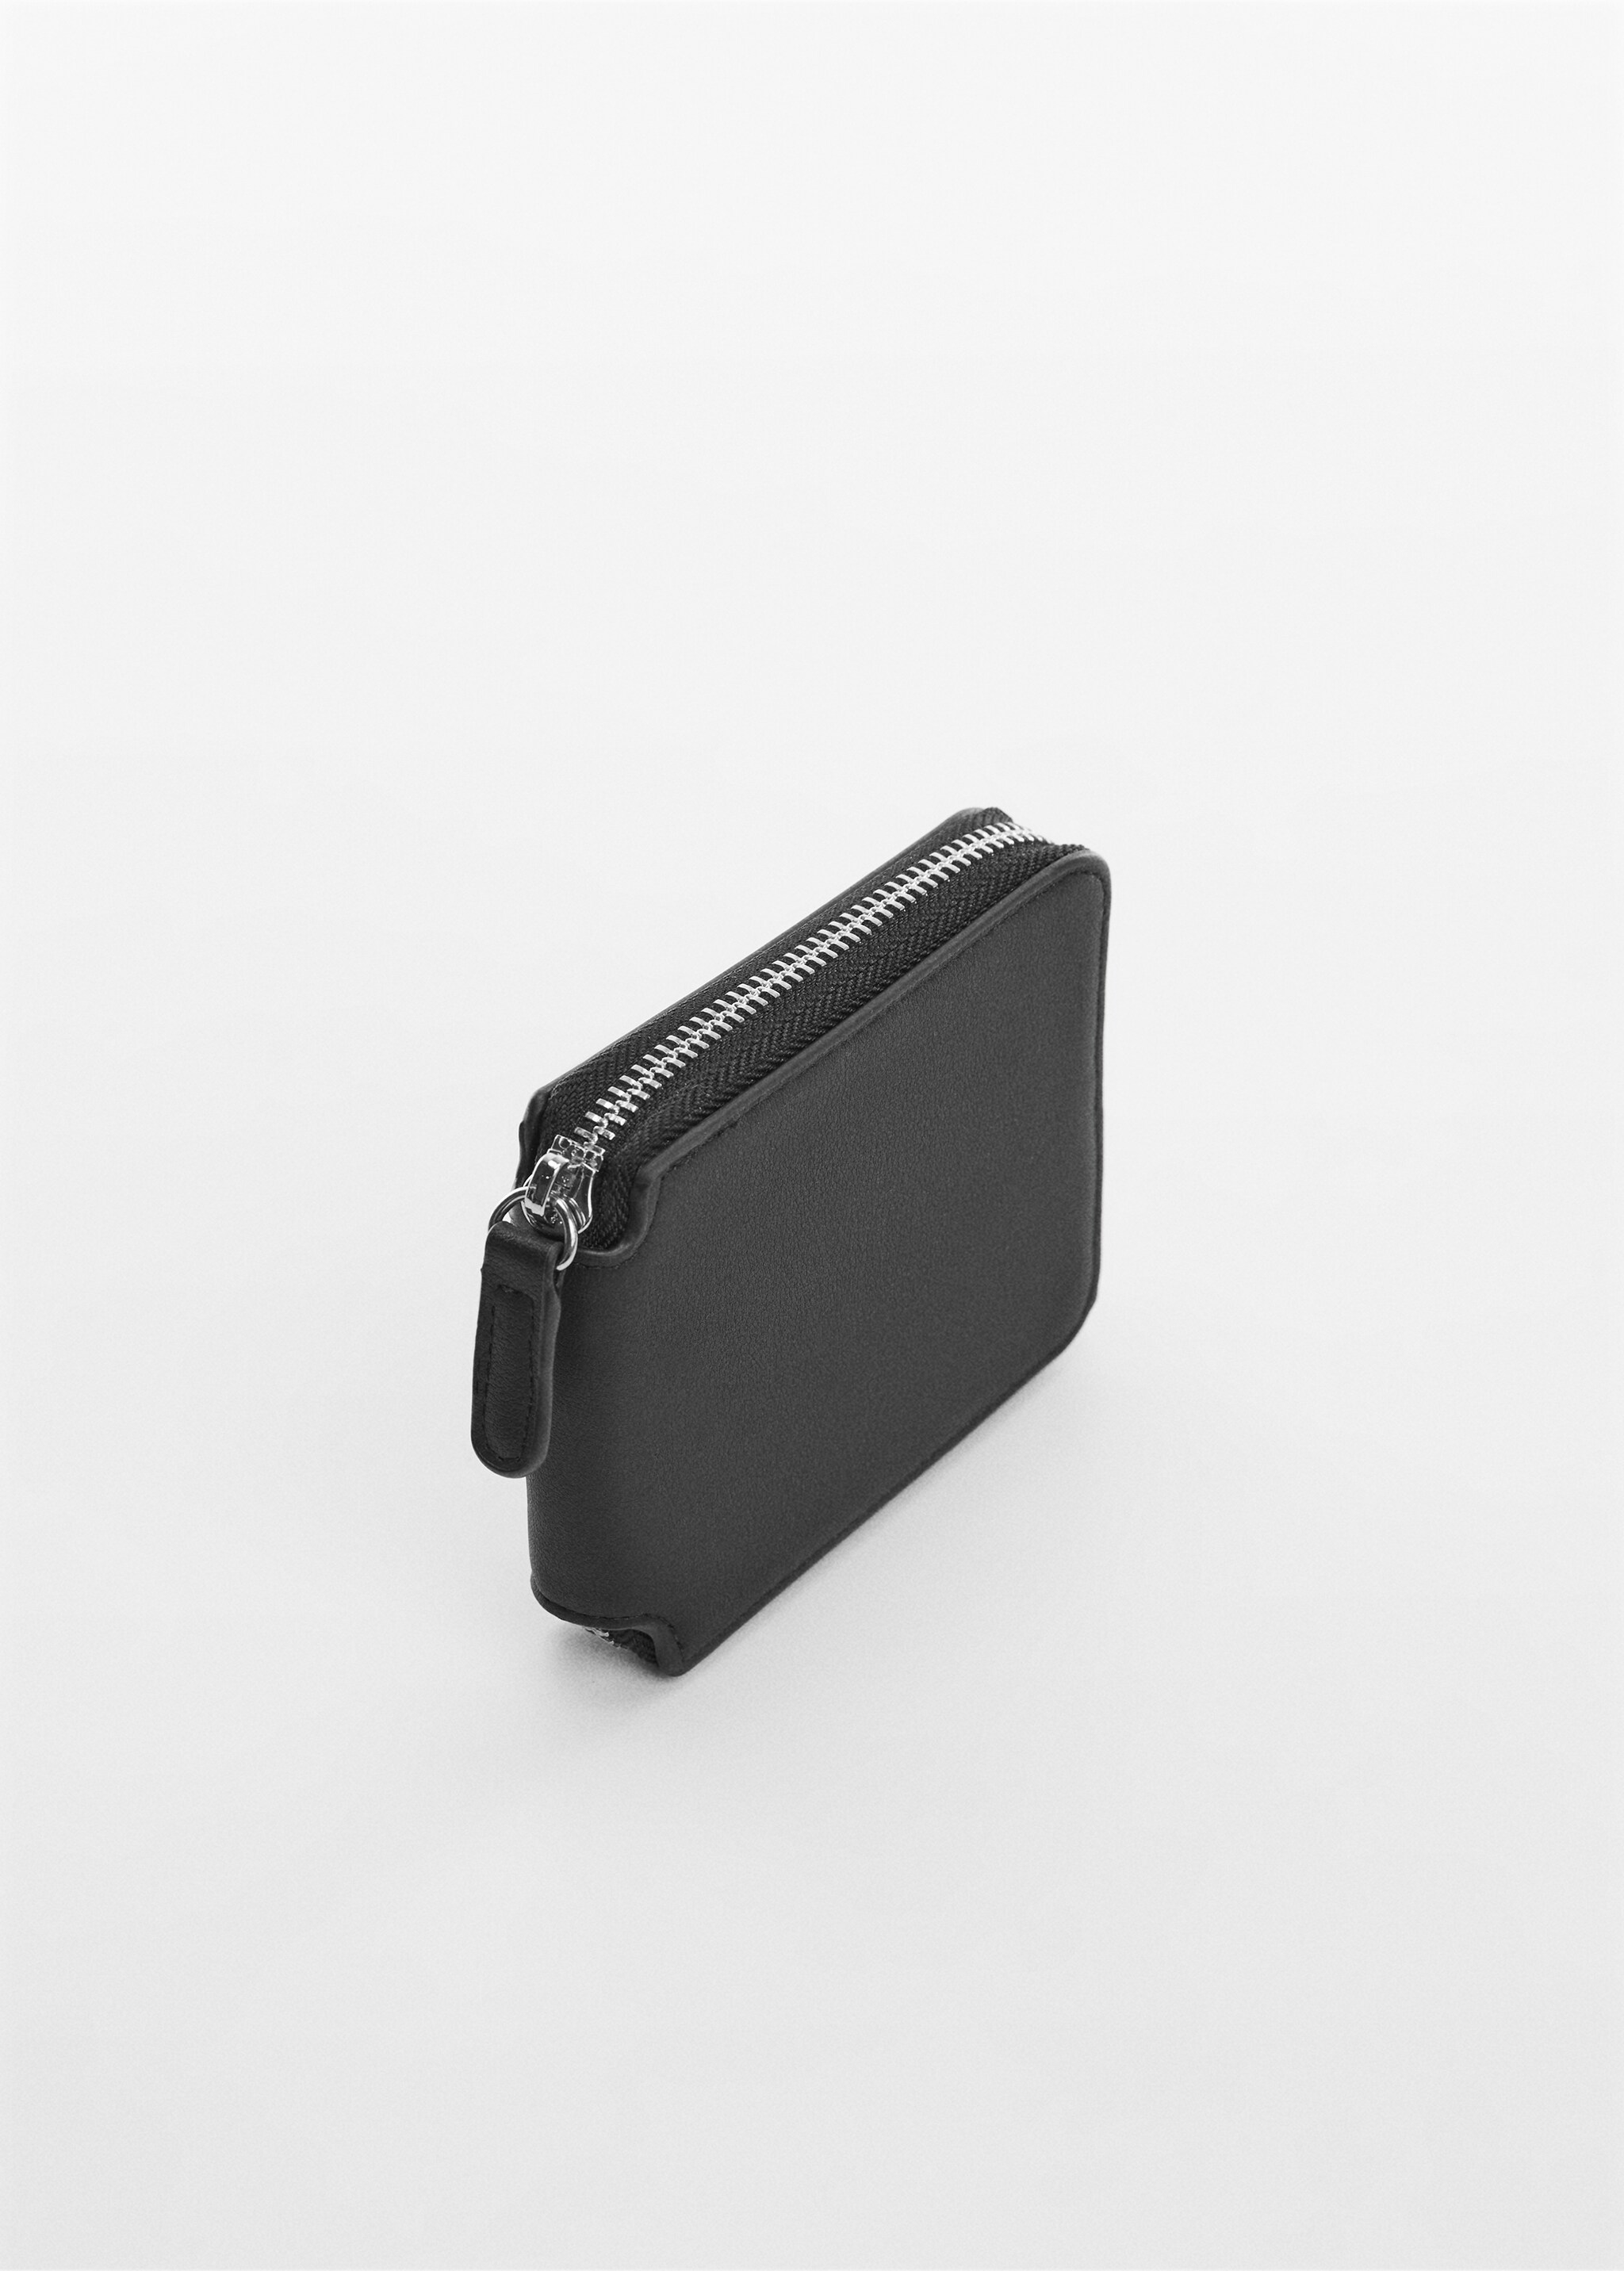 Portefeuille porte-cartes anti RFID - Plan moyen